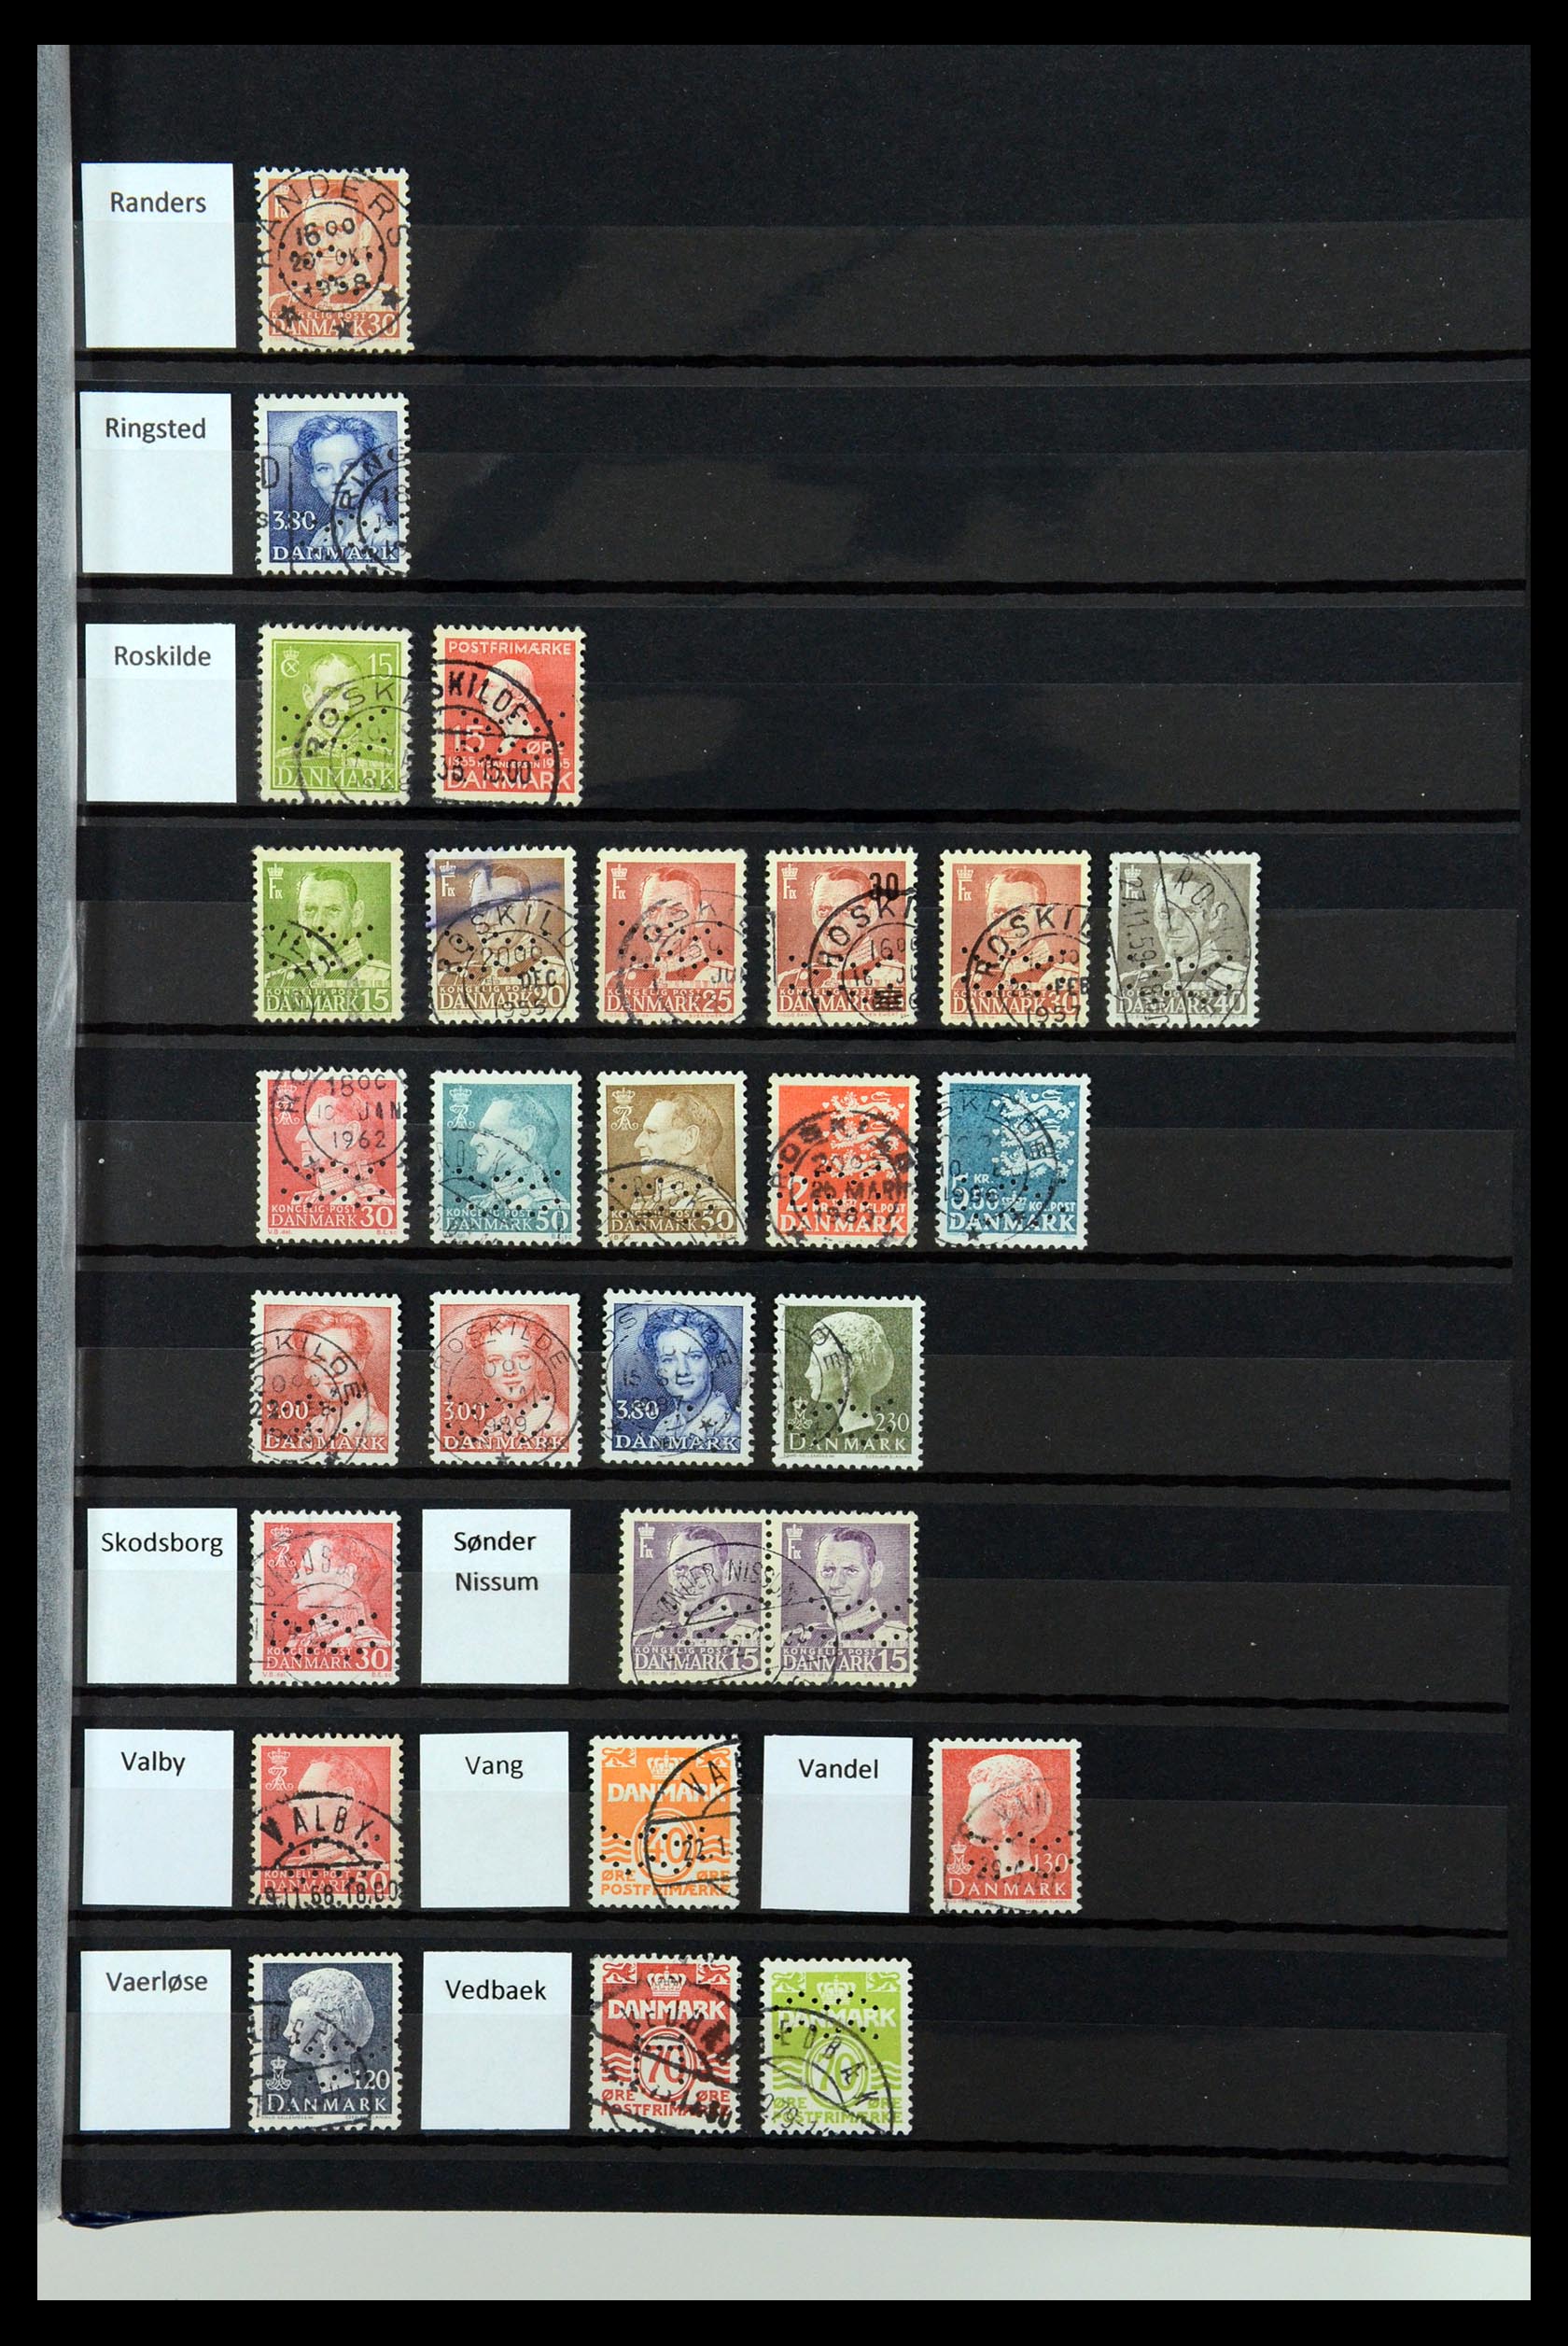 36396 116 - Stamp collection 36396 Denmark perfins.